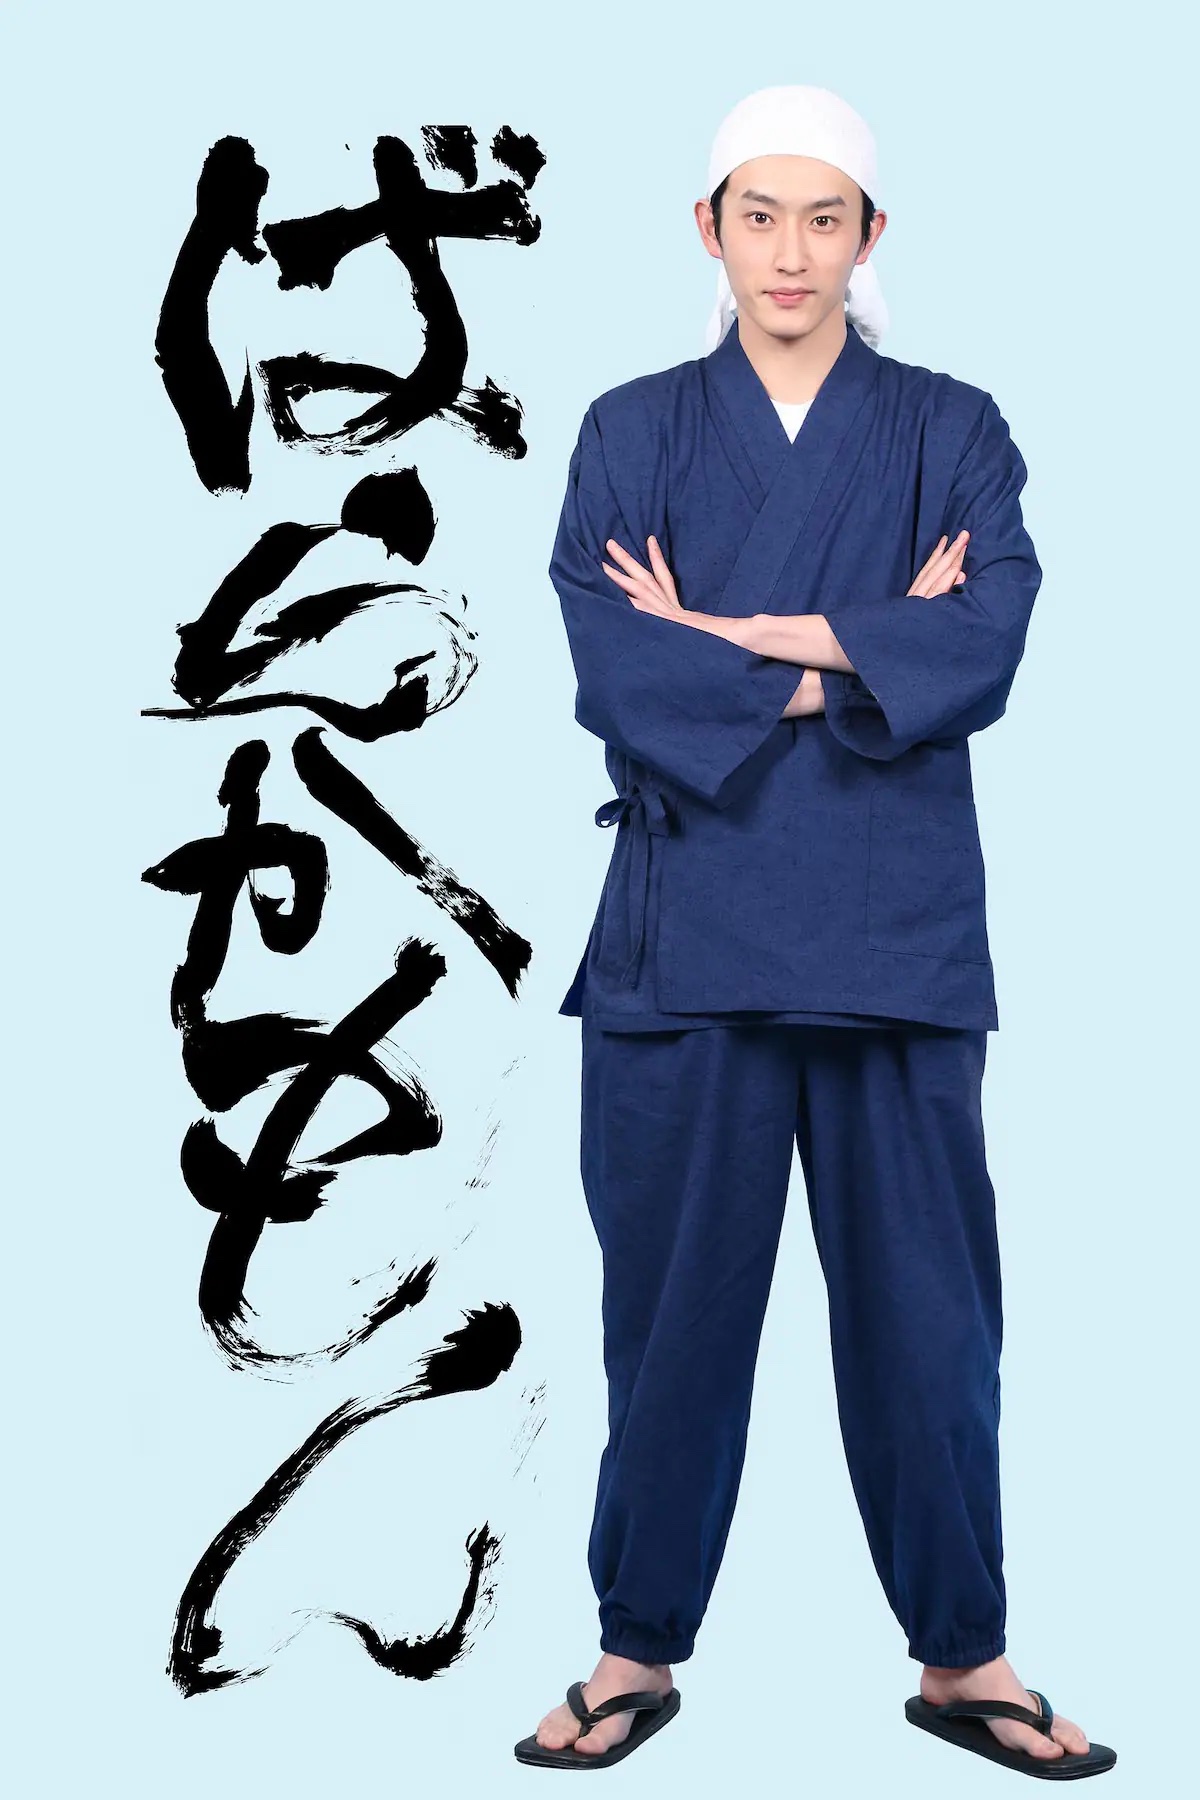 Drama Live Action Fuji TV Barakamon Yang dibintangi Yosuke Sugino Hingga  Ririsa Miyazaki merilis Trailer Terbaru. Menceritakan…